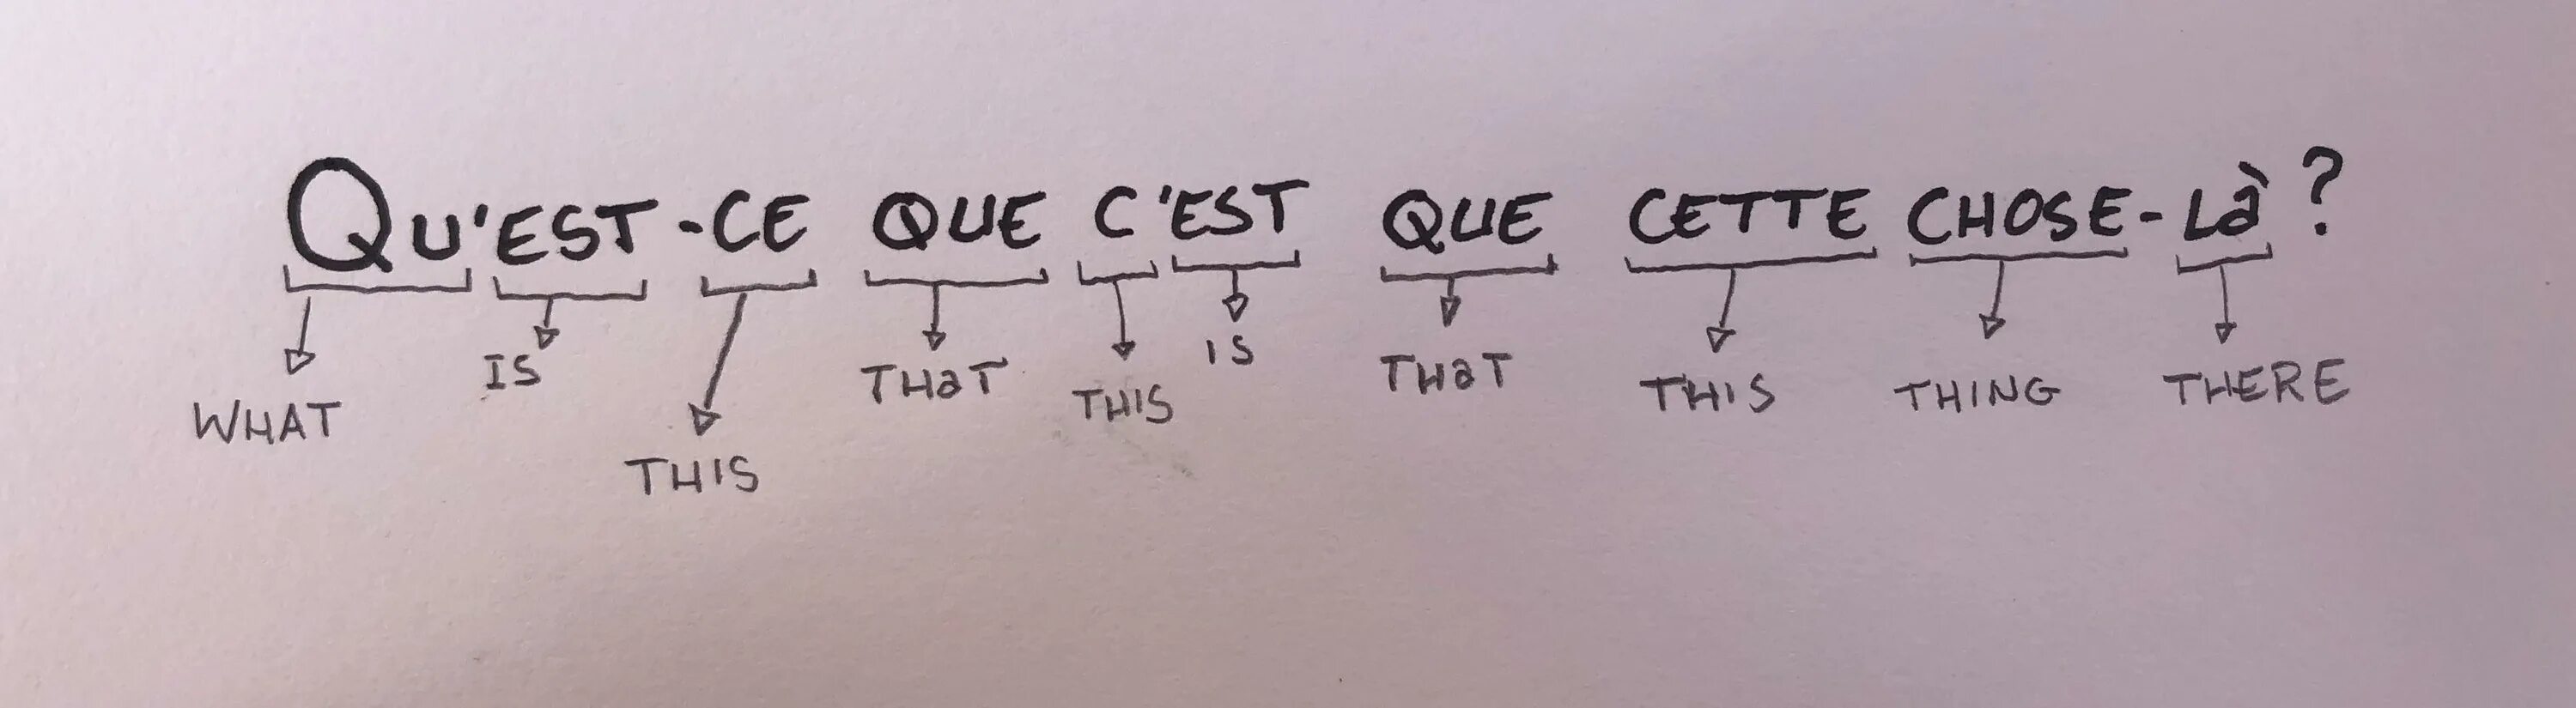 Qu est ce que vous. Qu'est-ce que c'est Мем. Вопросы во французском языке est-ce que. Est французский. Quest ce que c'est перевод.